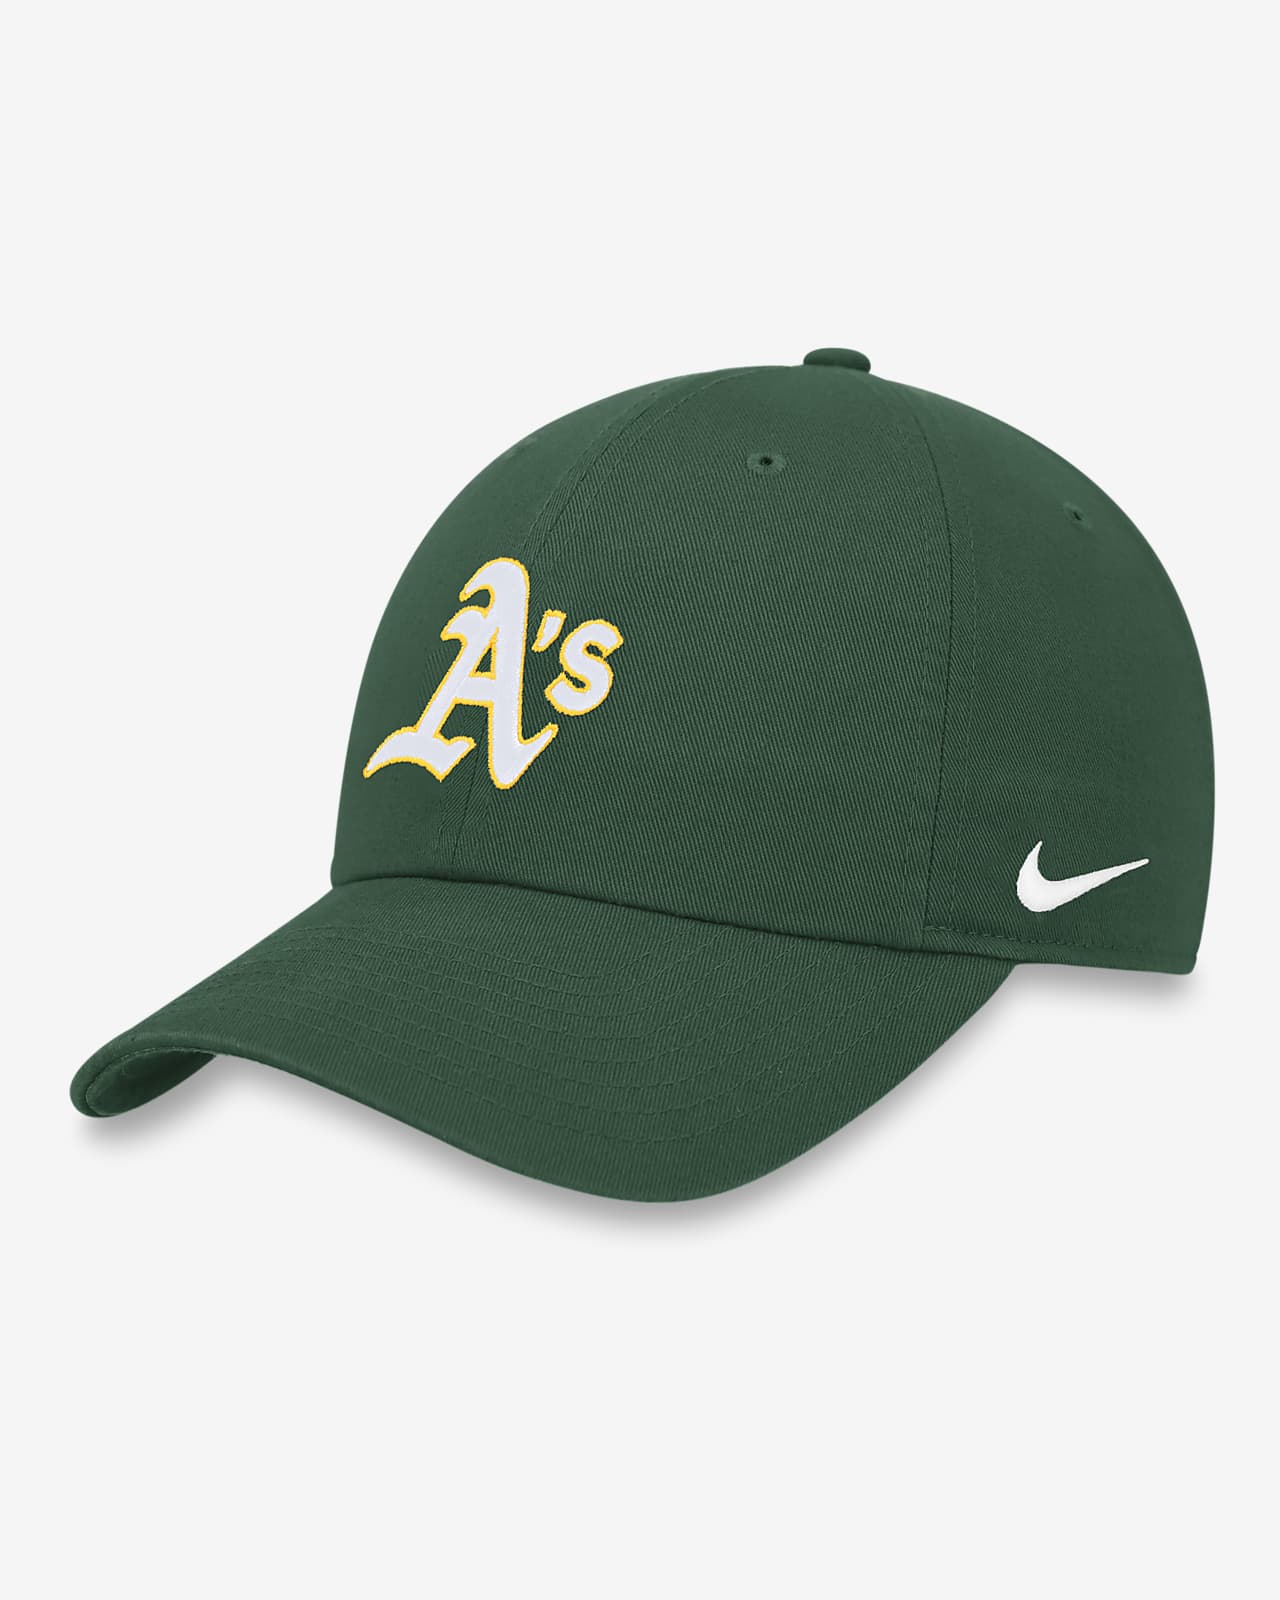 Oakland Athletics Heritage86 Men's Nike MLB Adjustable Hat.